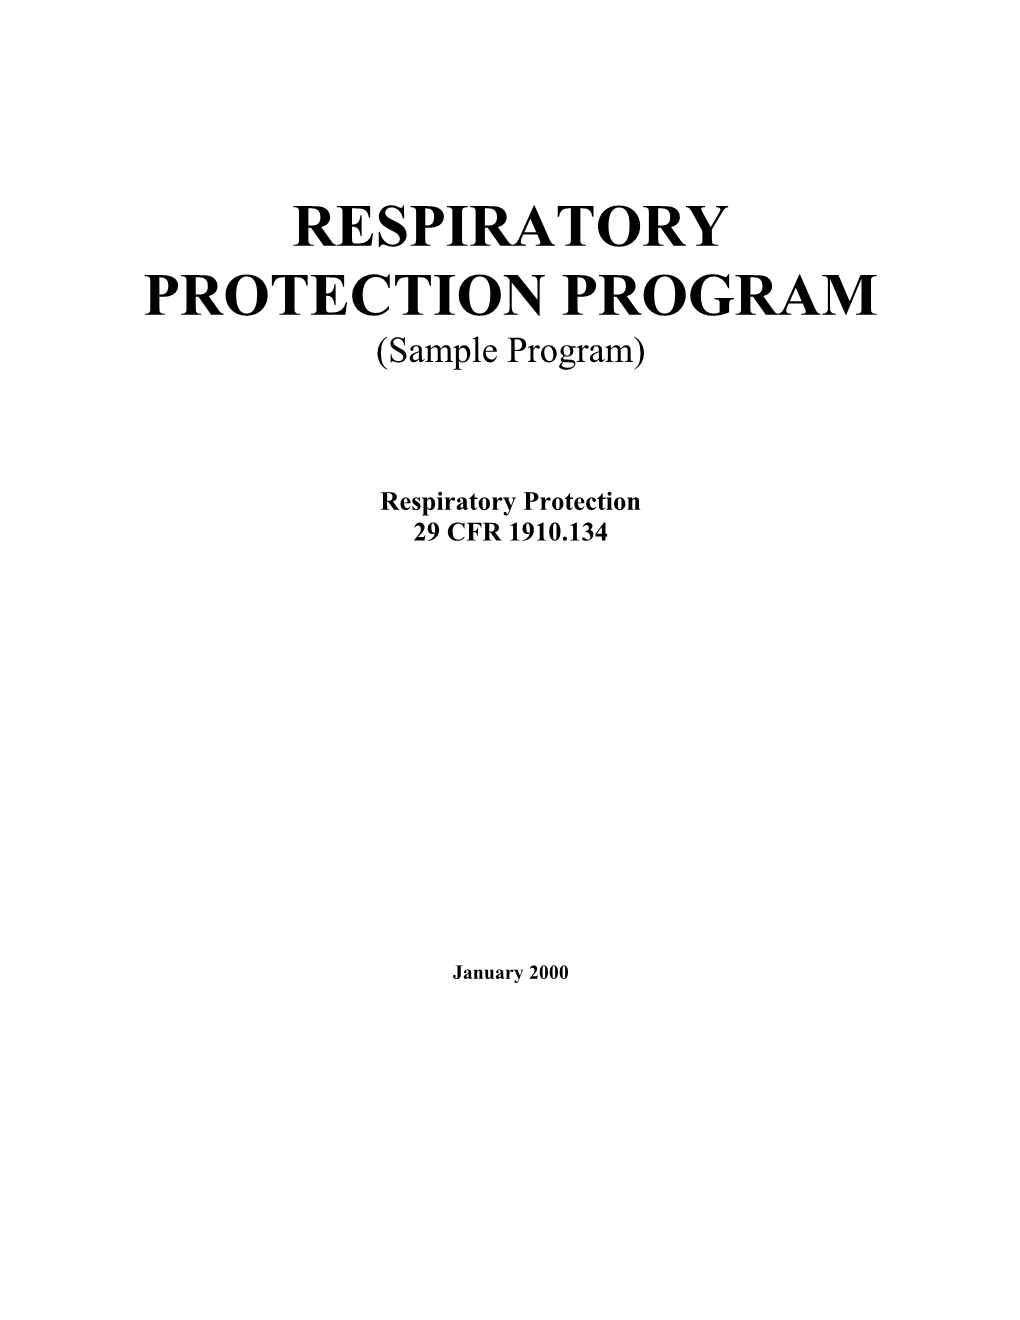 Respiratory Protection Program s1